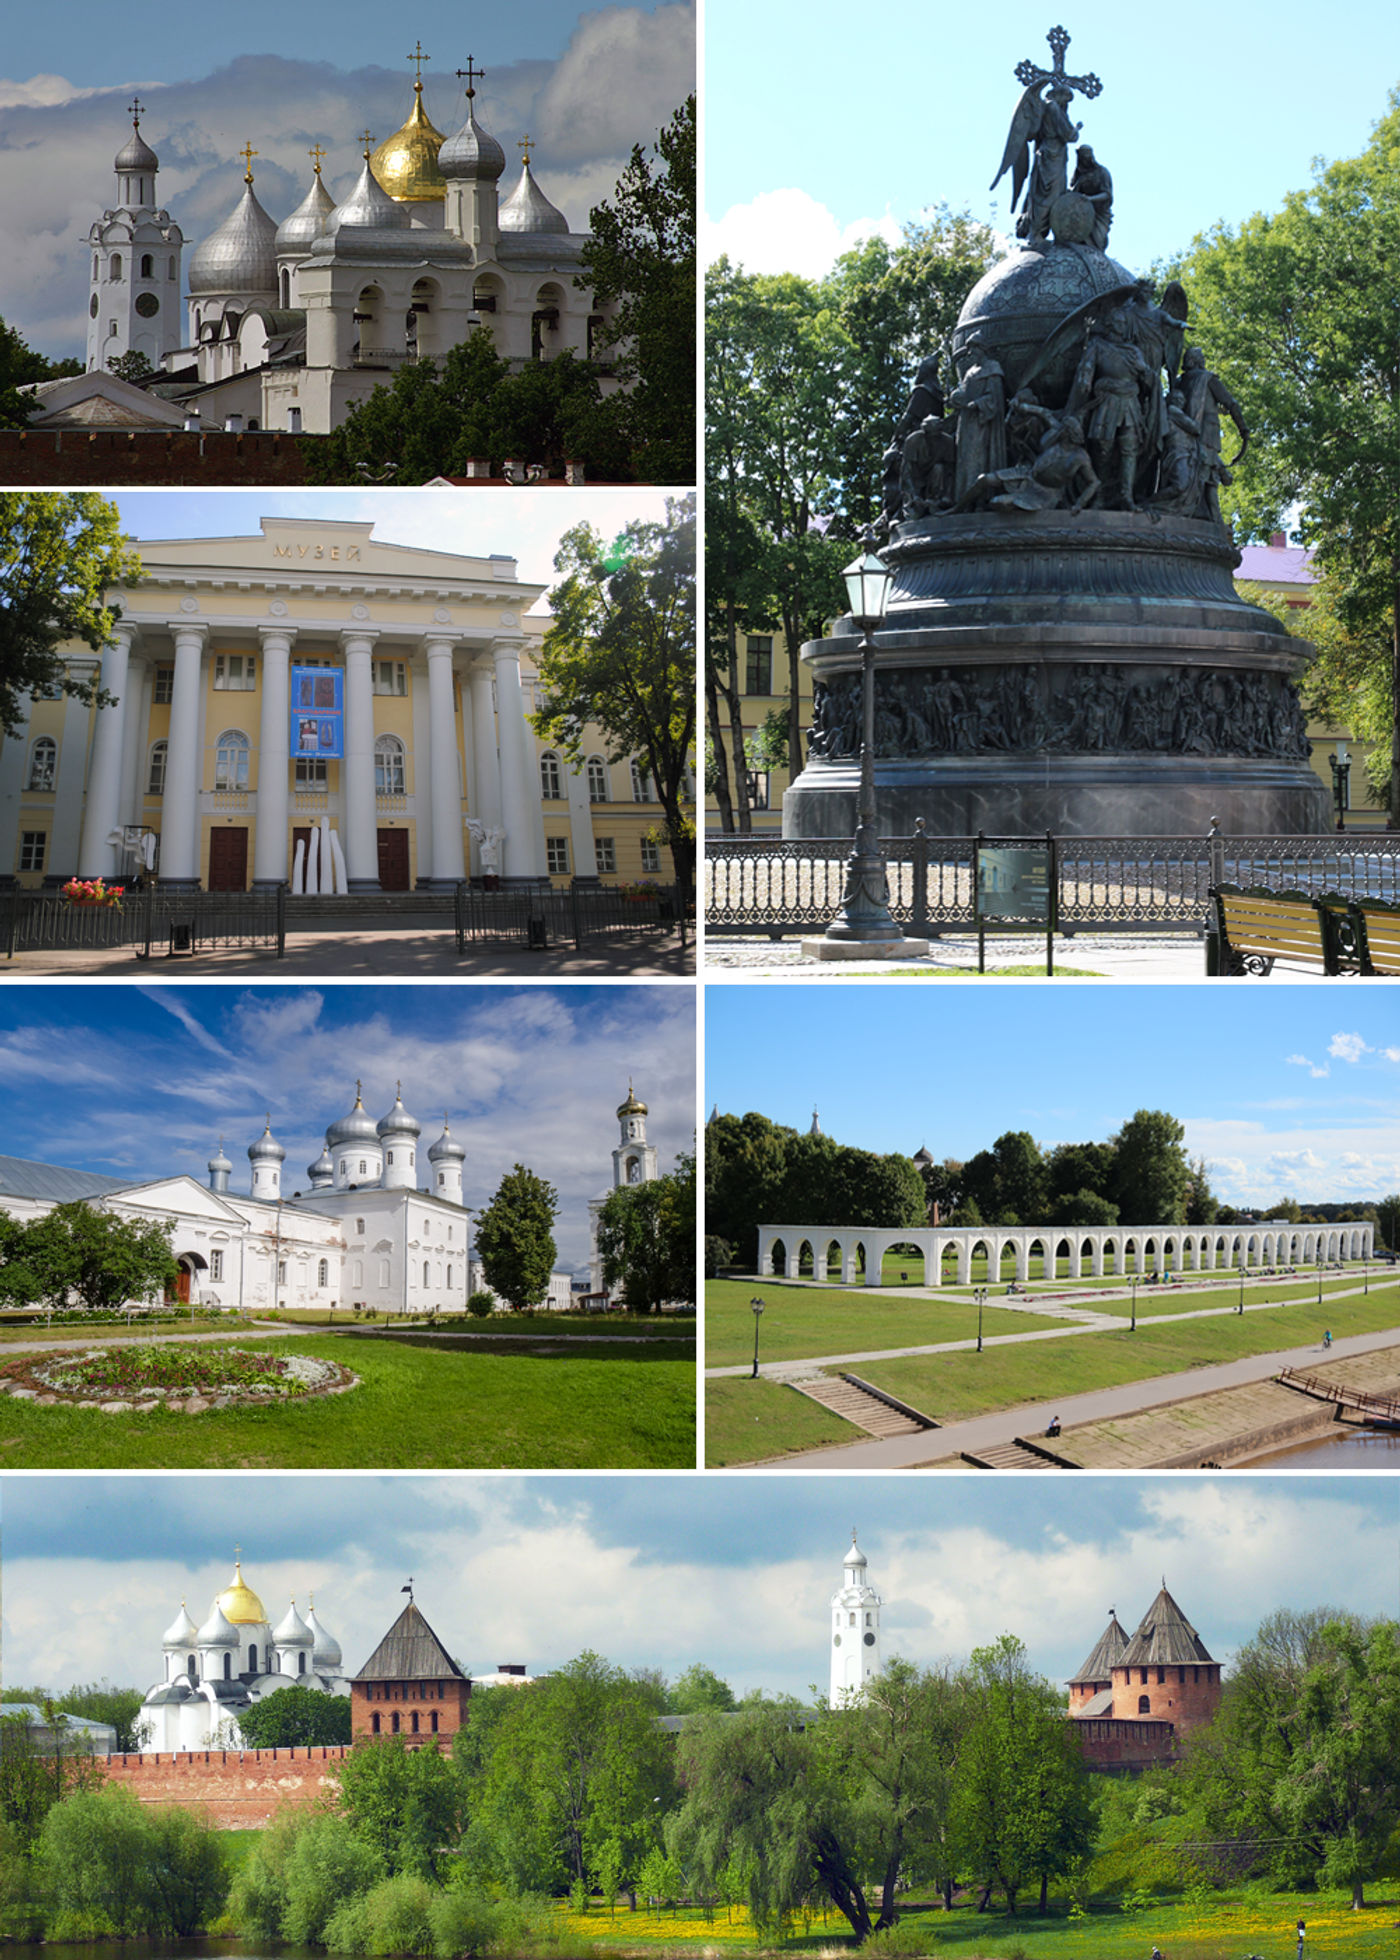 Veliky Novgorod : Voyage dans le temps au Moyen Âge